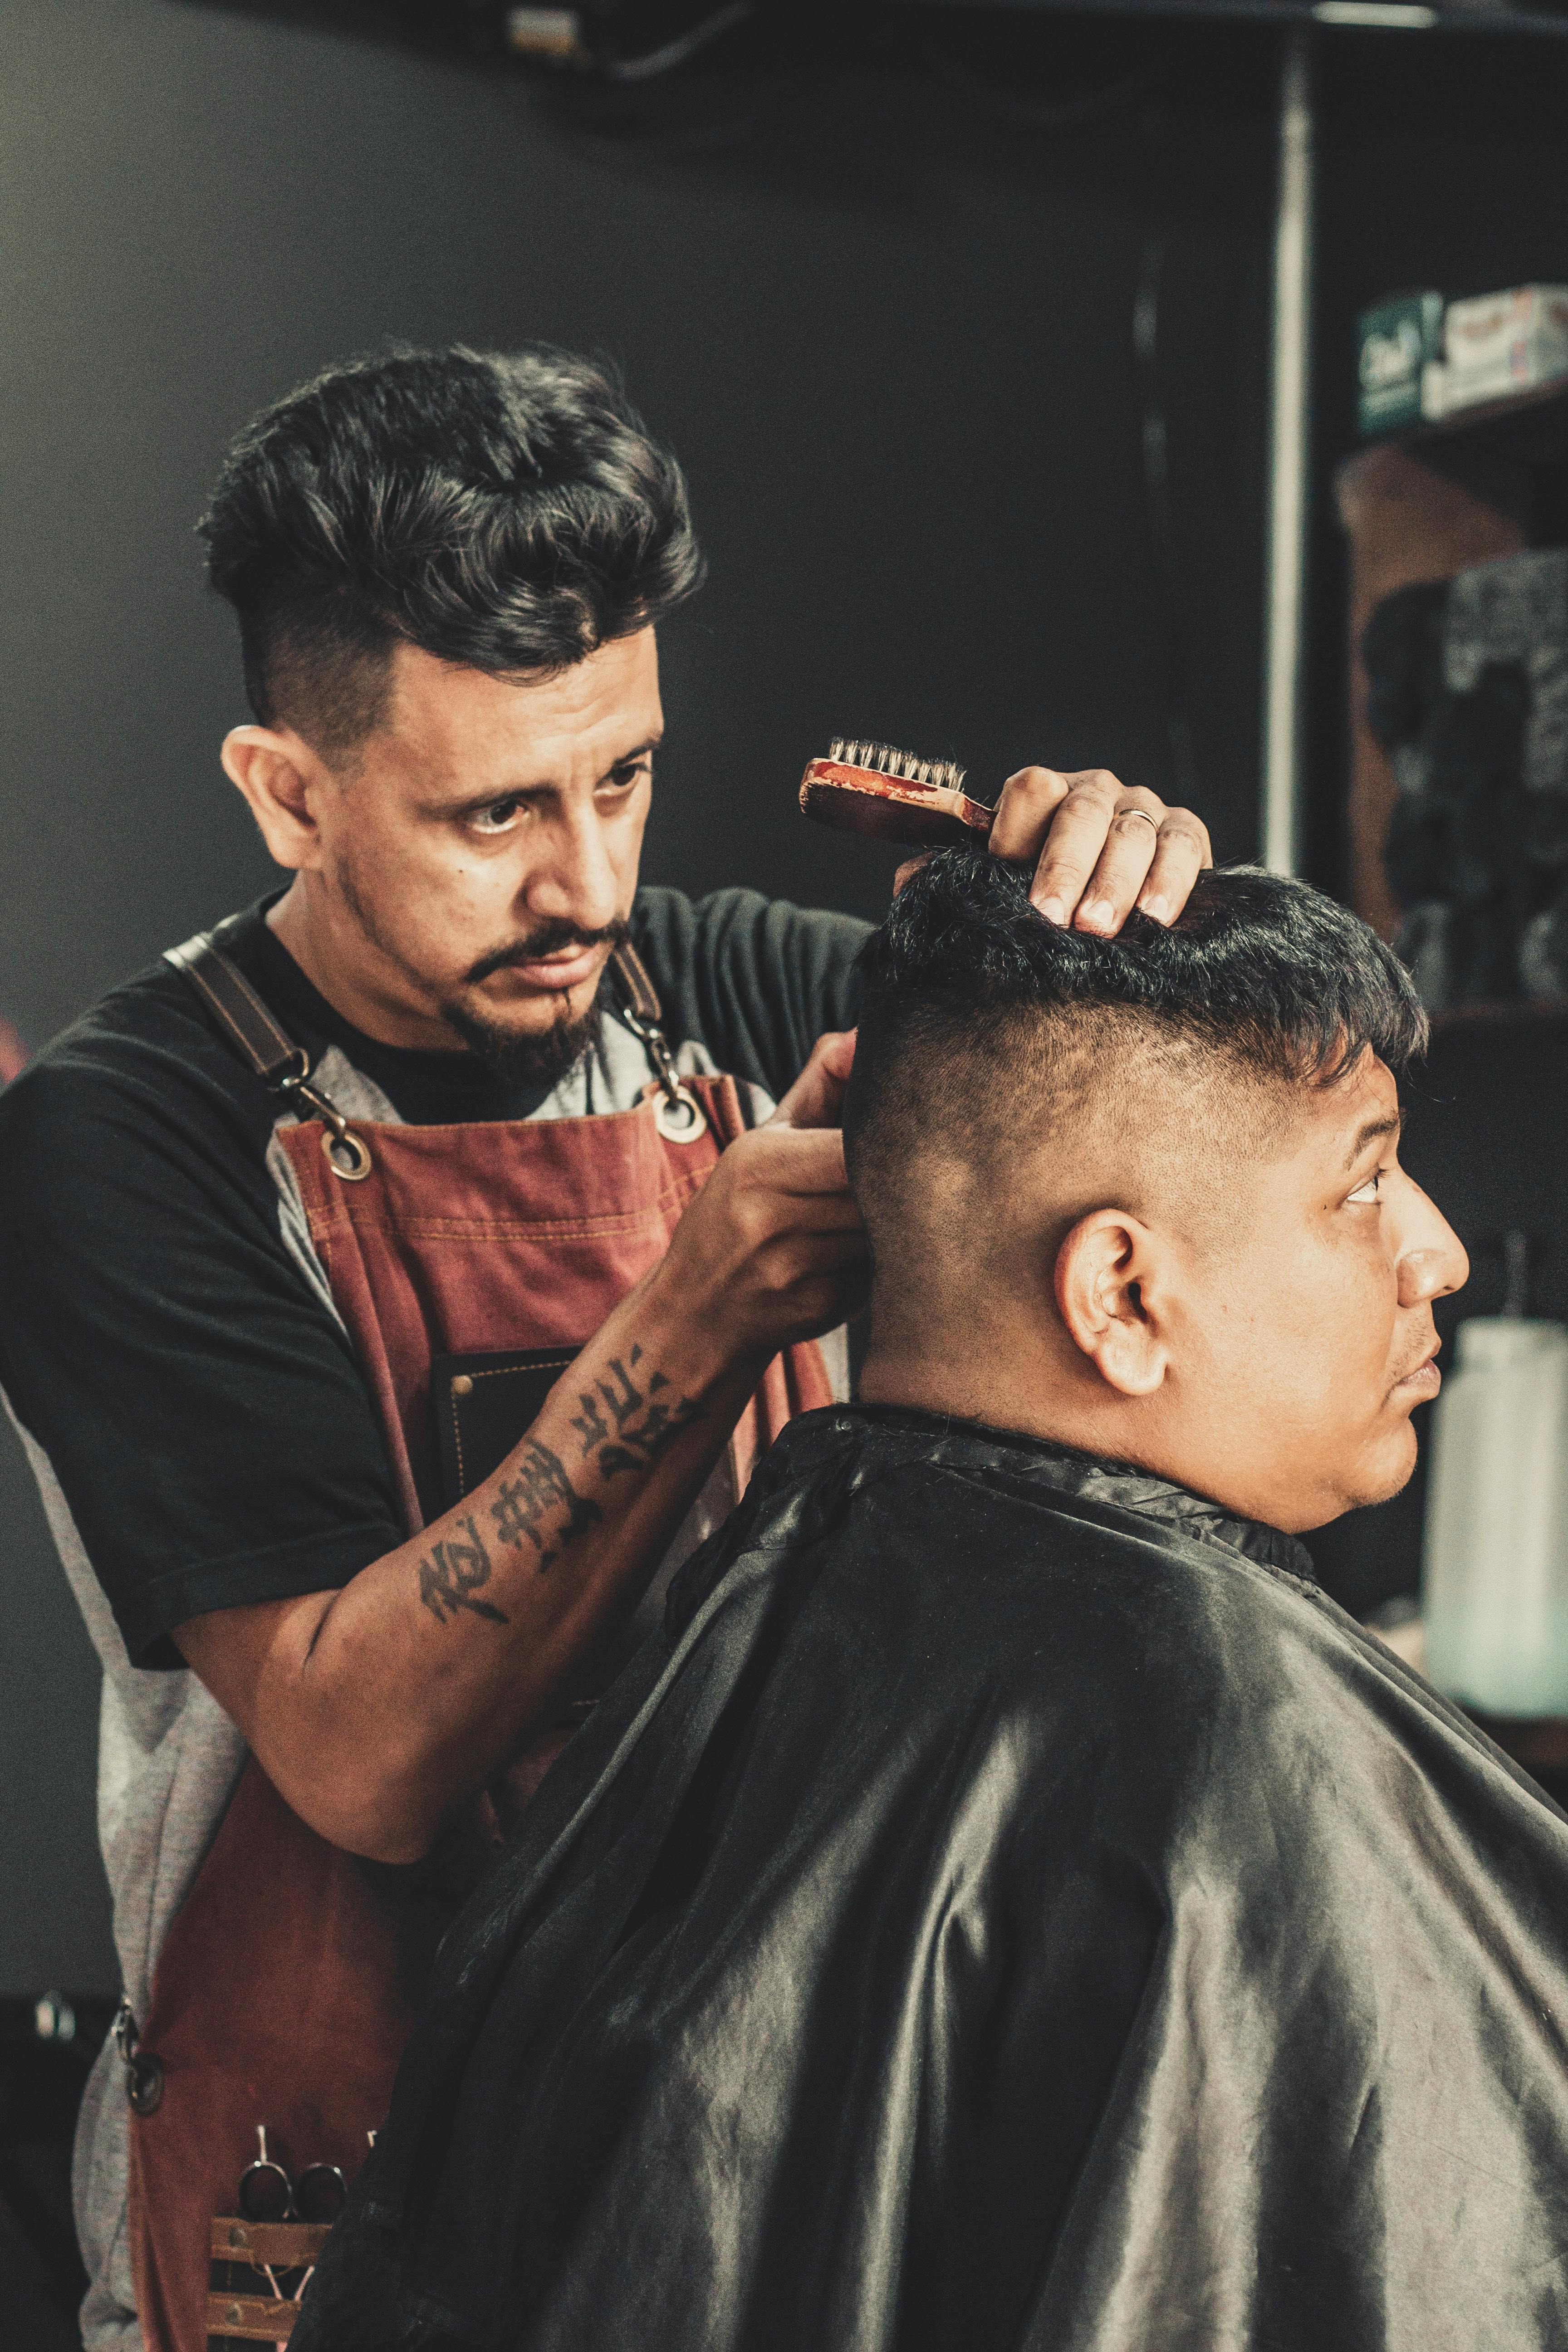 Barber Cutting Man's Hair · Free Stock Photo